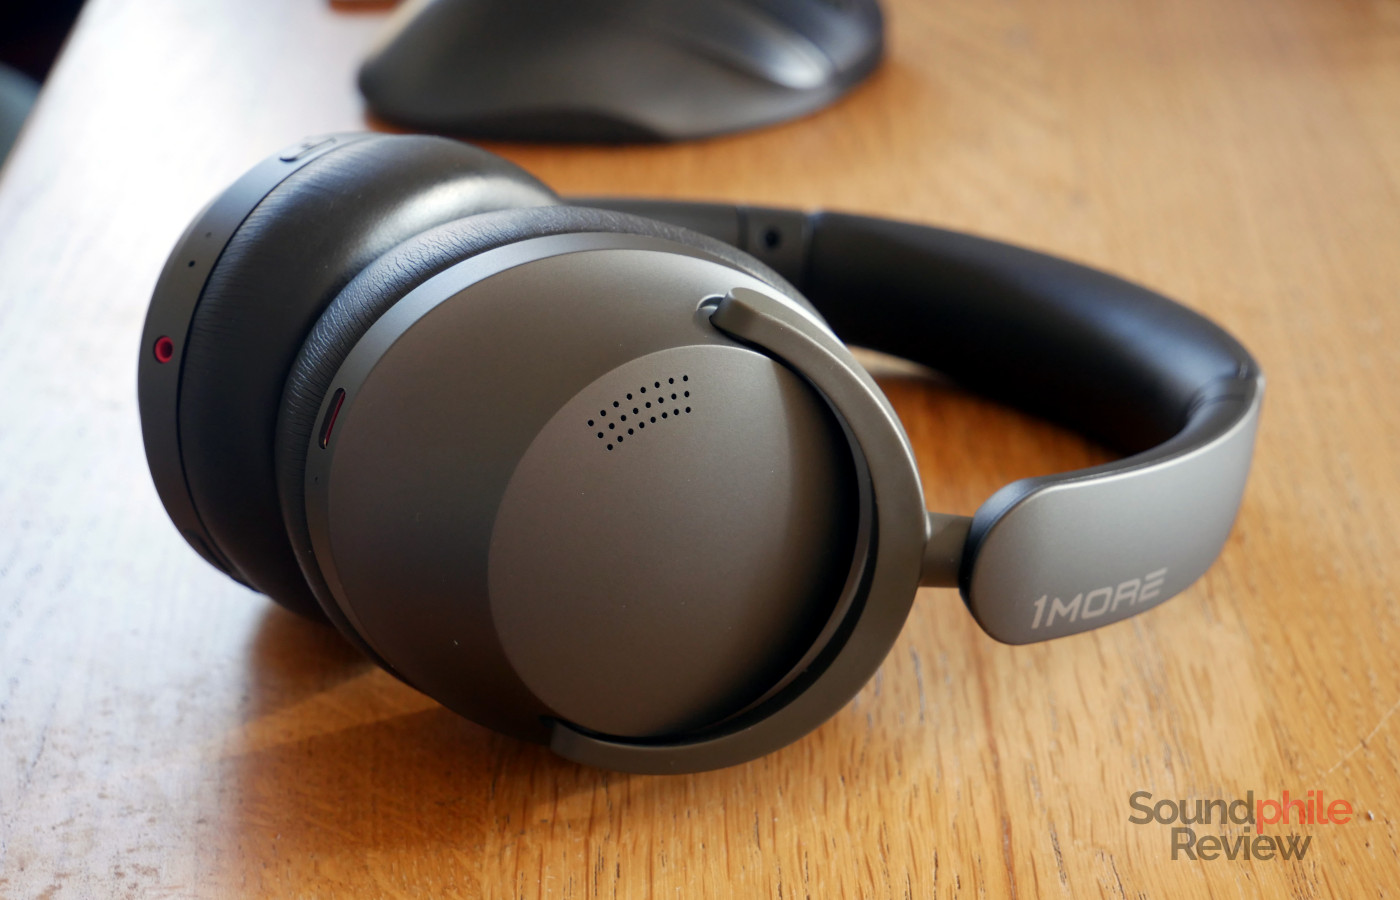 1MORE SonoFlow Wireless Active Noise Cancelling Headphones – UK 1MORE